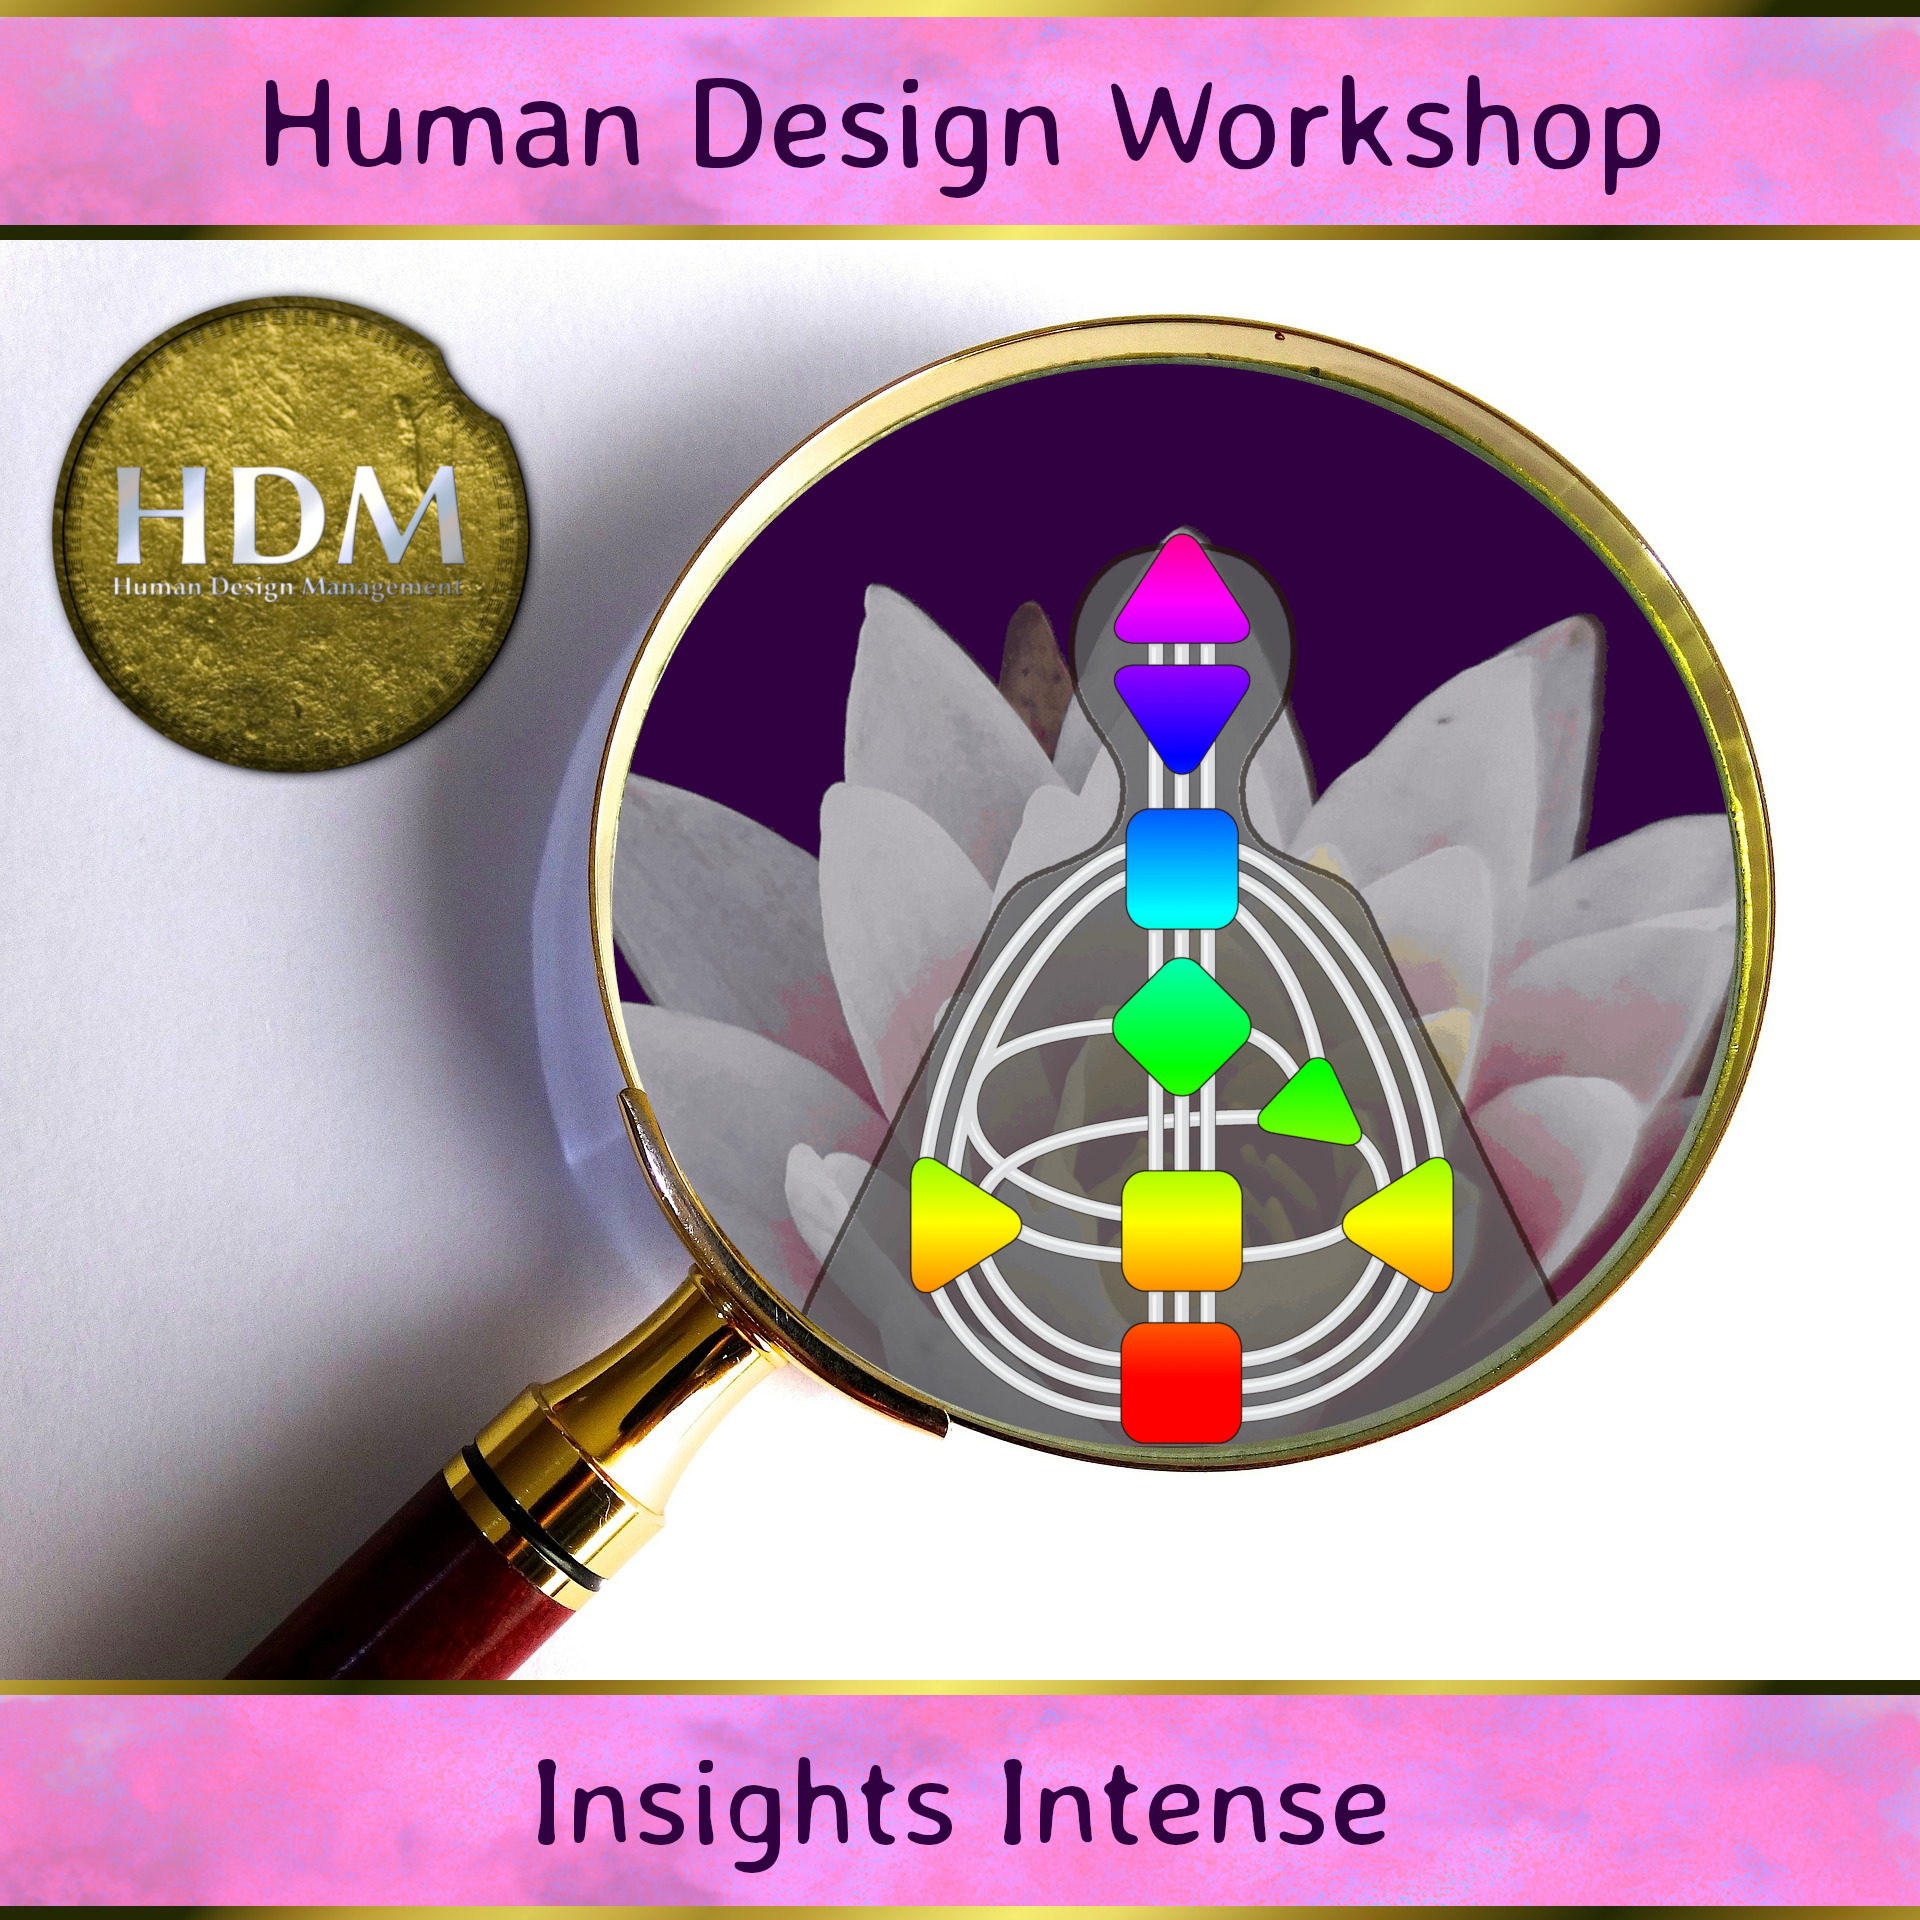 Human Design Workshop Insights Intense